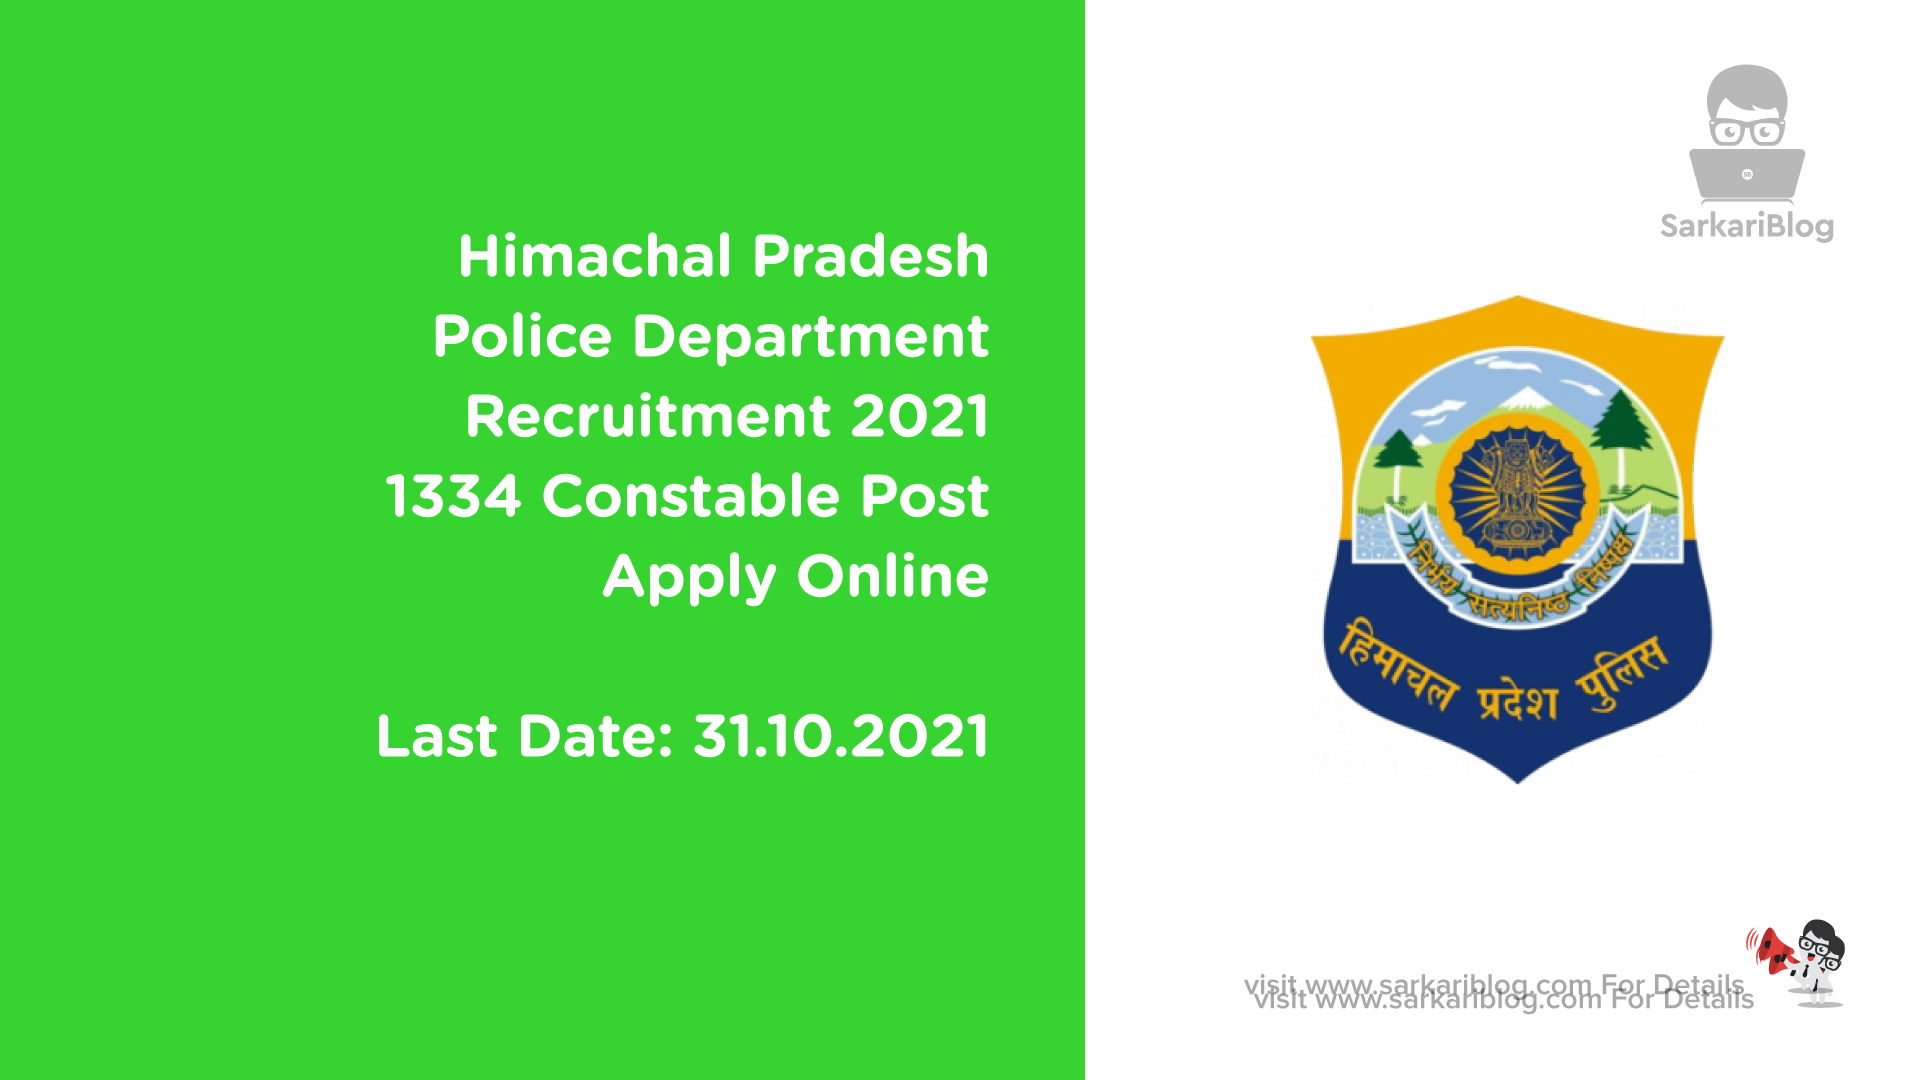 Himachal Pradesh Police Department Recruitment 2021, 1334 Constable Post, Apply Online